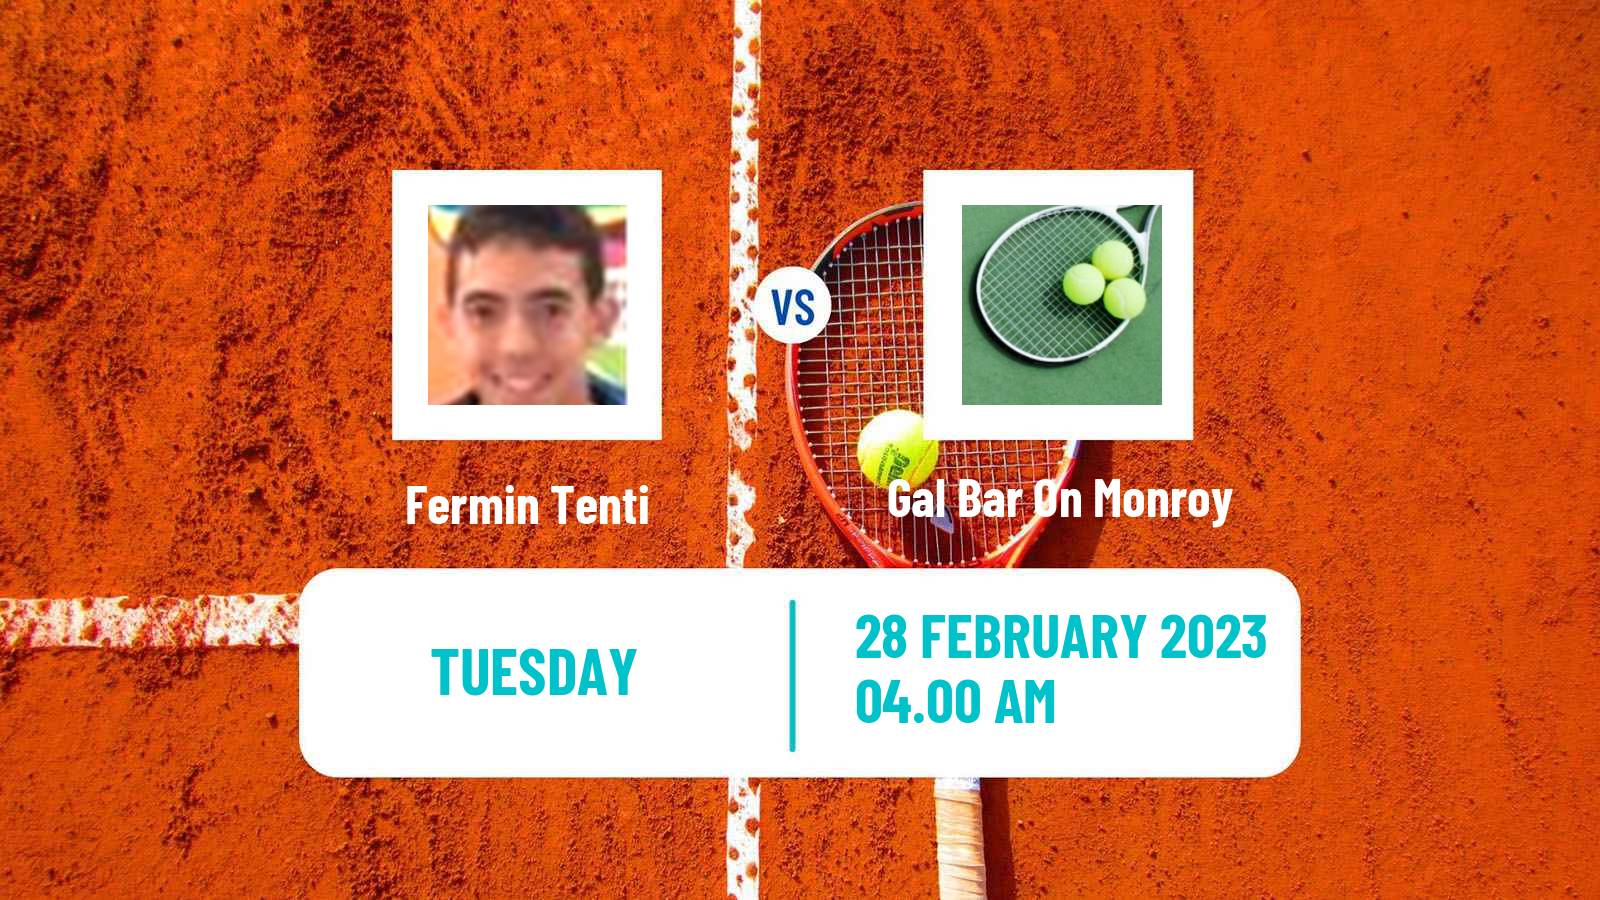 Tennis ITF Tournaments Fermin Tenti - Gal Bar On Monroy